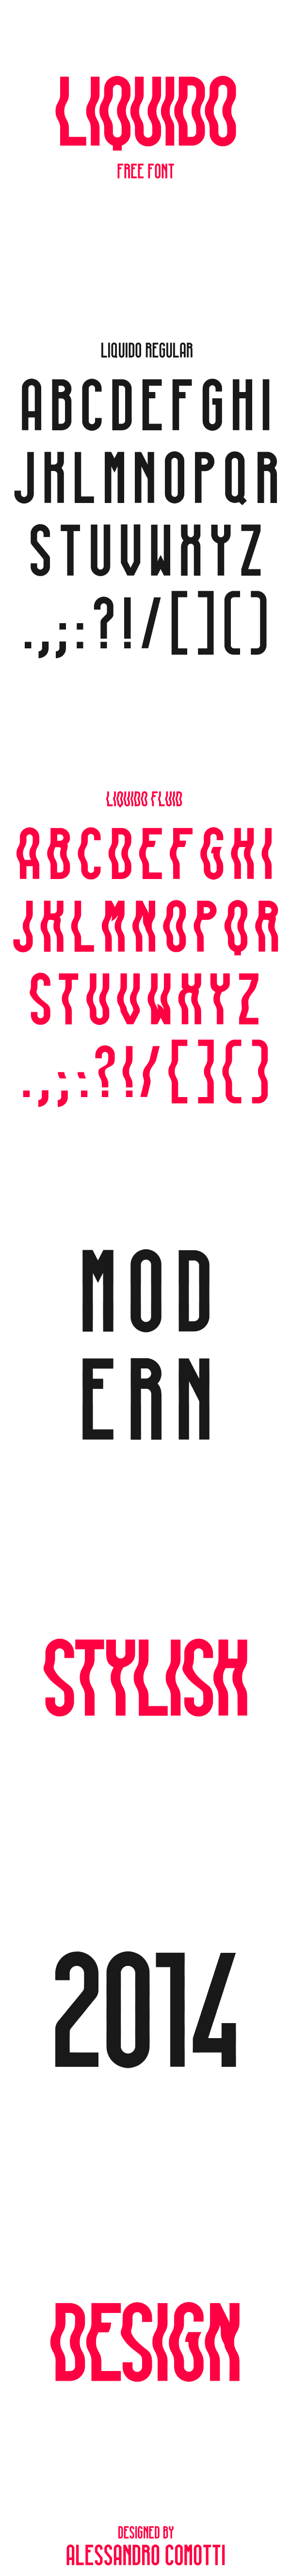 LIQUIDO Free Font by Alessandro Comotti in 2015年1月整理的最新时尚设计字体下载